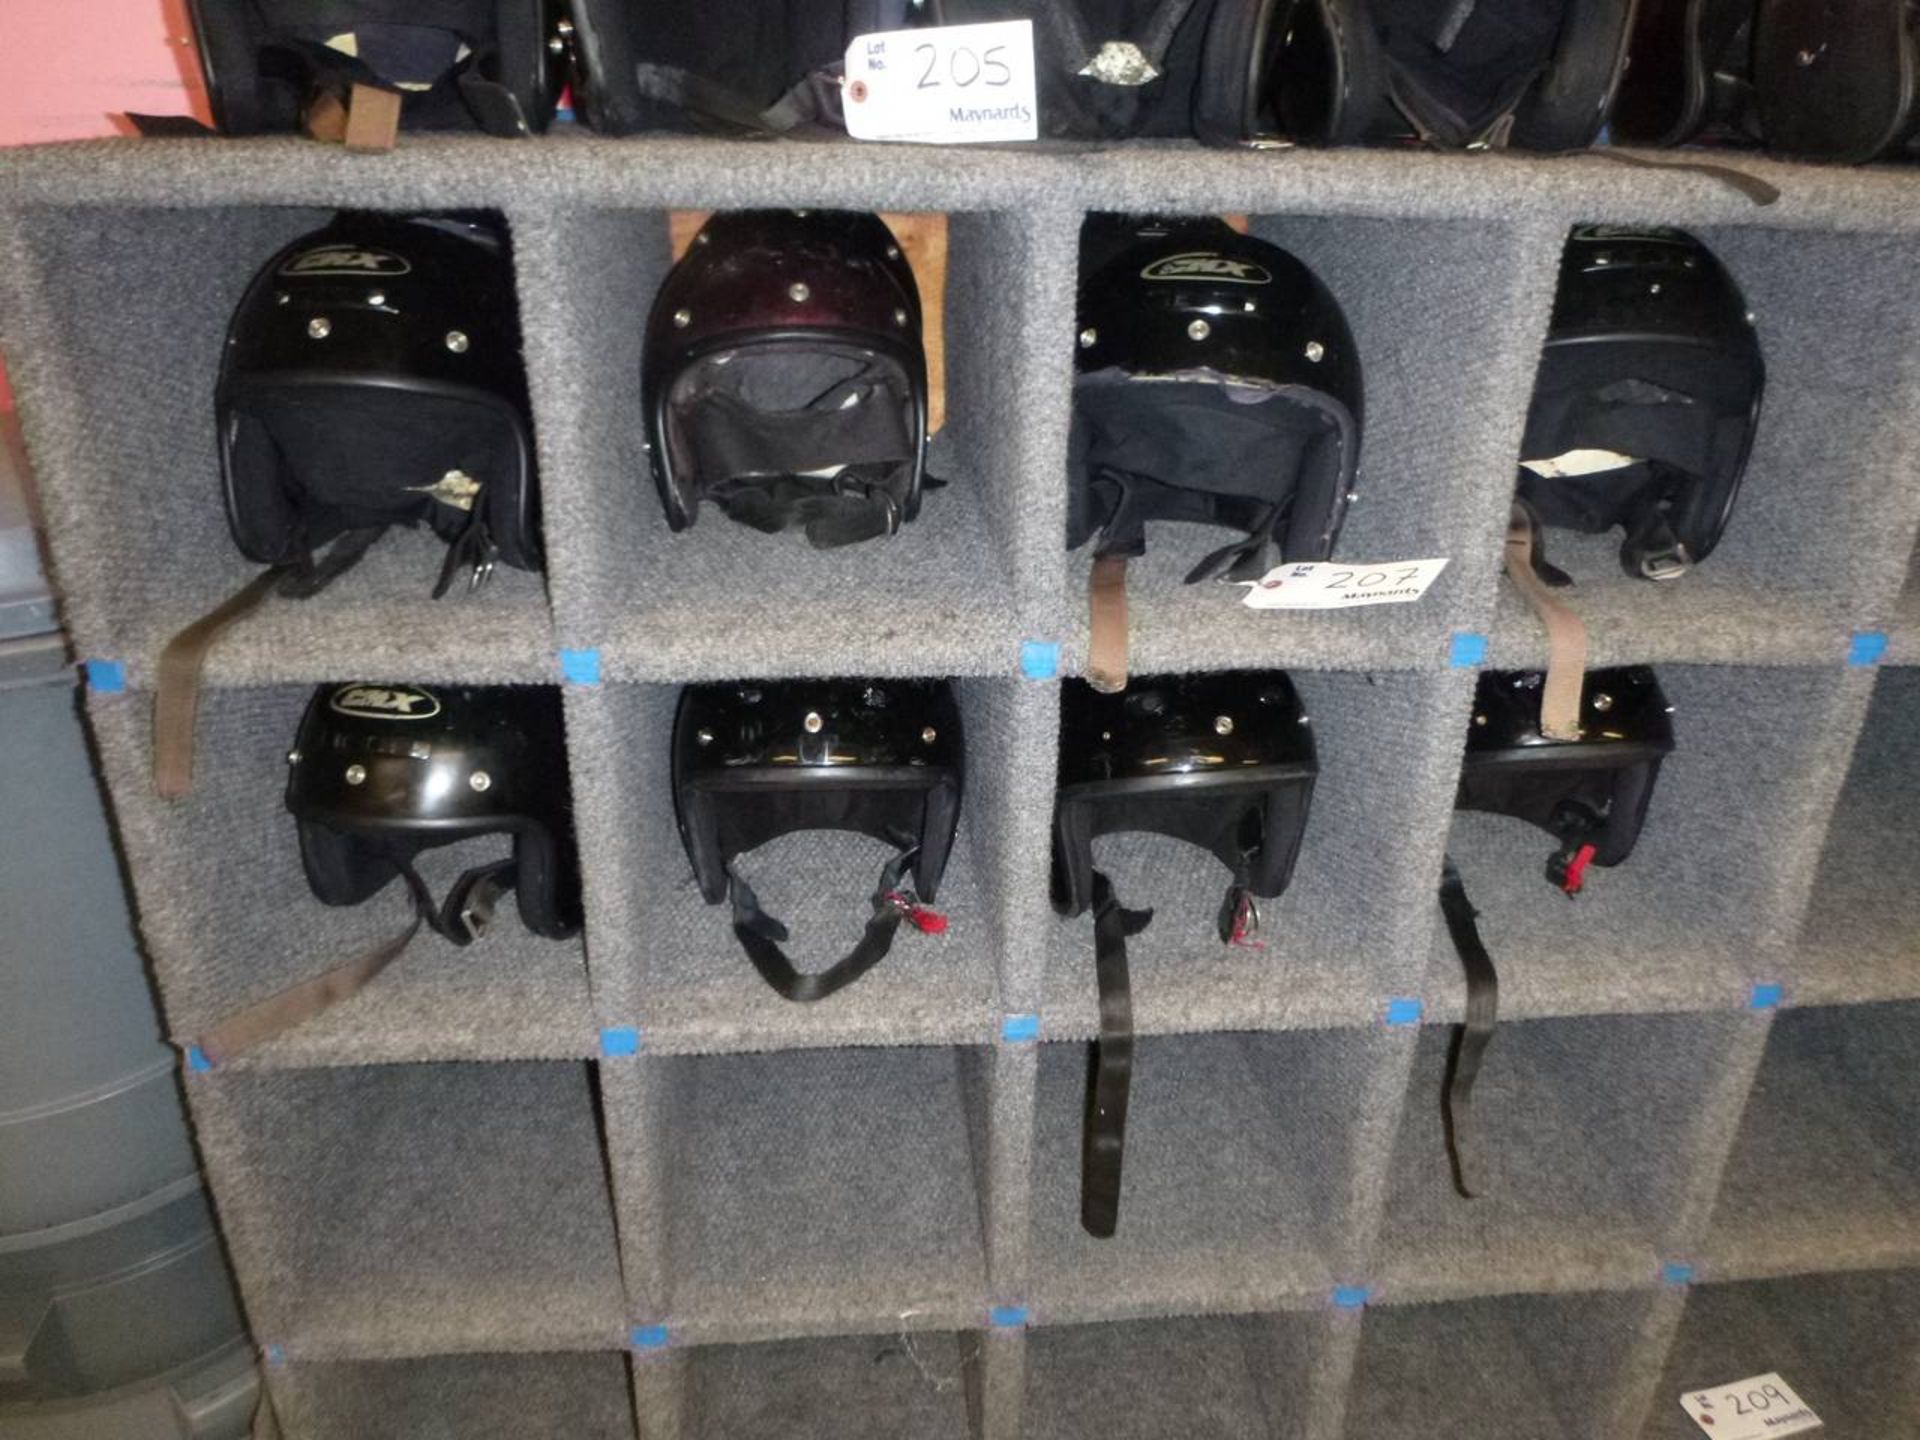 (16) Mixed Helmets